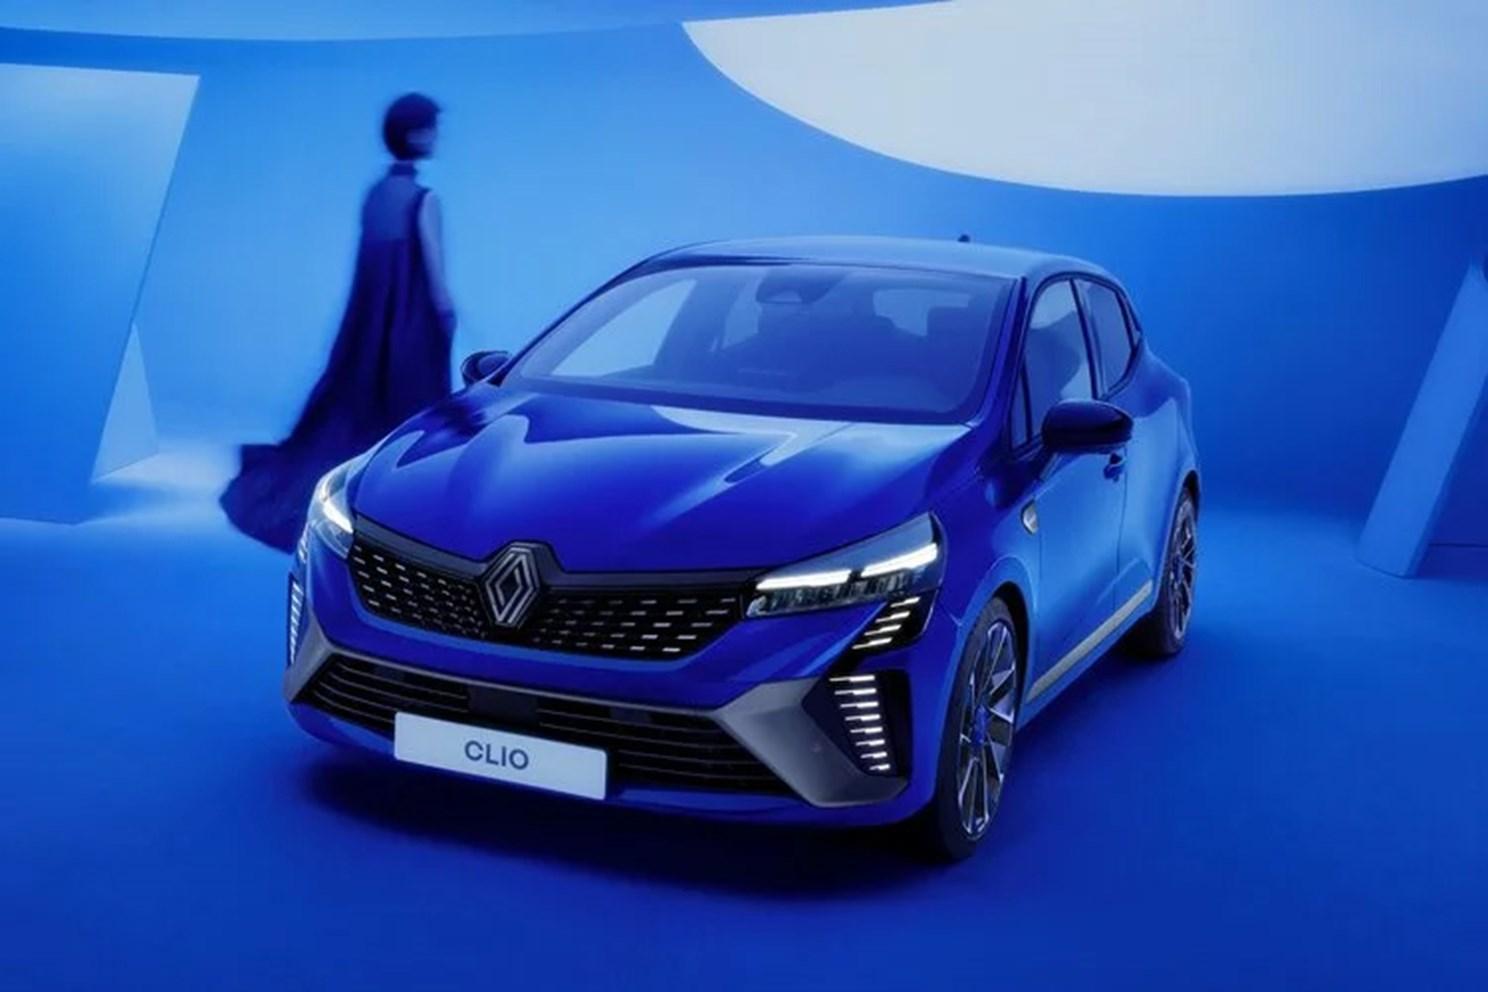 New Renault Clio E-Tech full hybrid